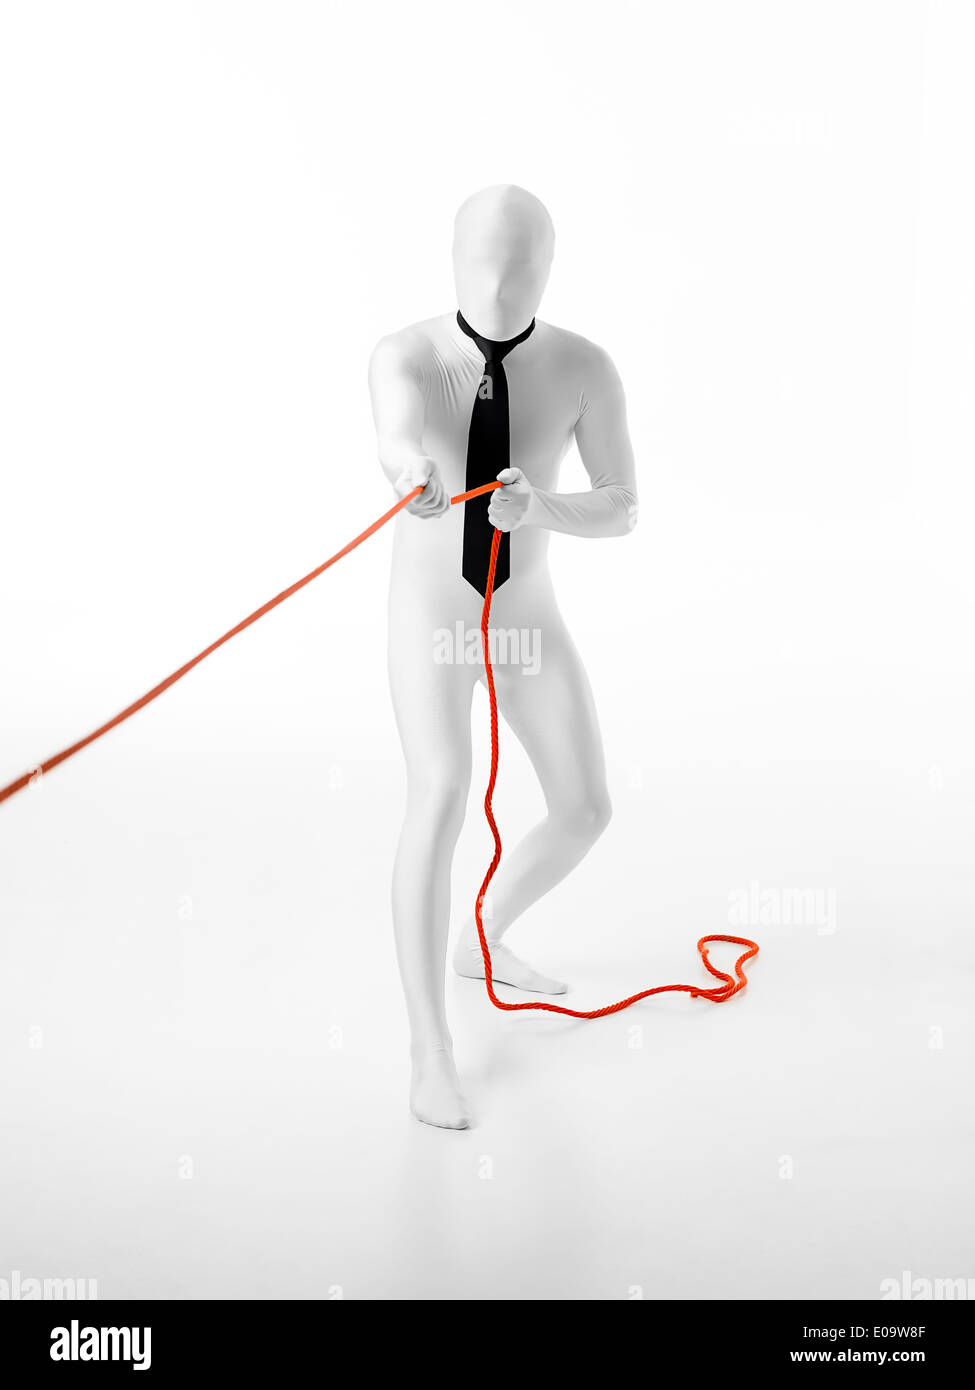 Imprenditore senza volto con black tie tira una corda arancione Foto Stock